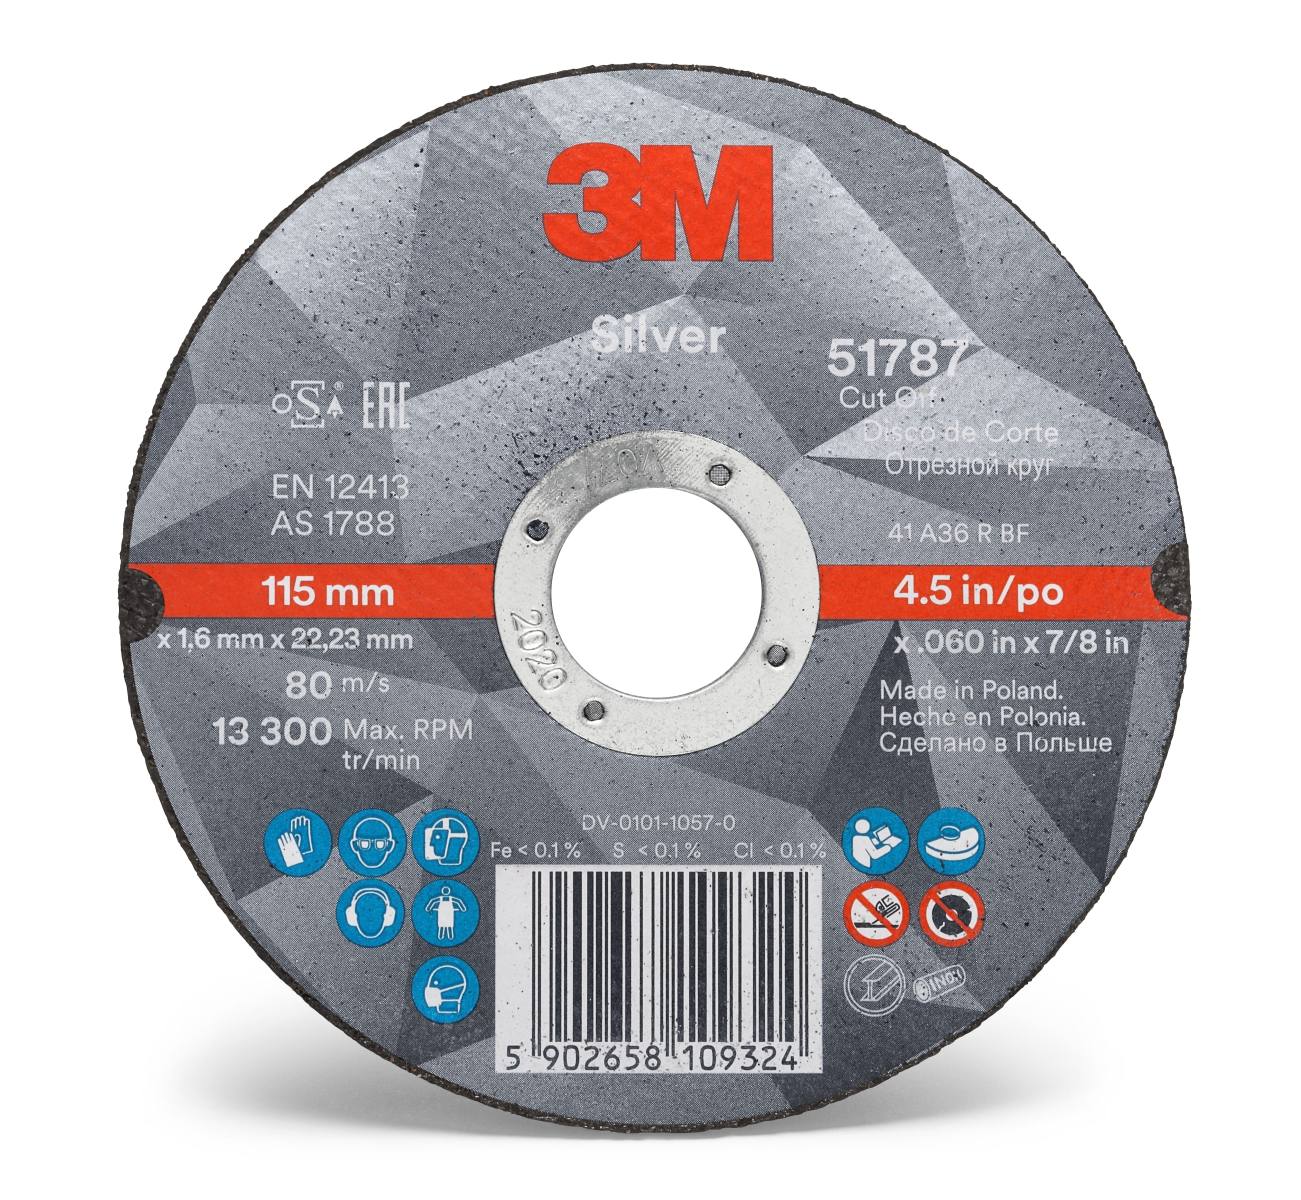 3M Silver Cut-Off Wheel cutting disc, 180 mm, 2.0 mm, 22.23 mm, T41, 51797